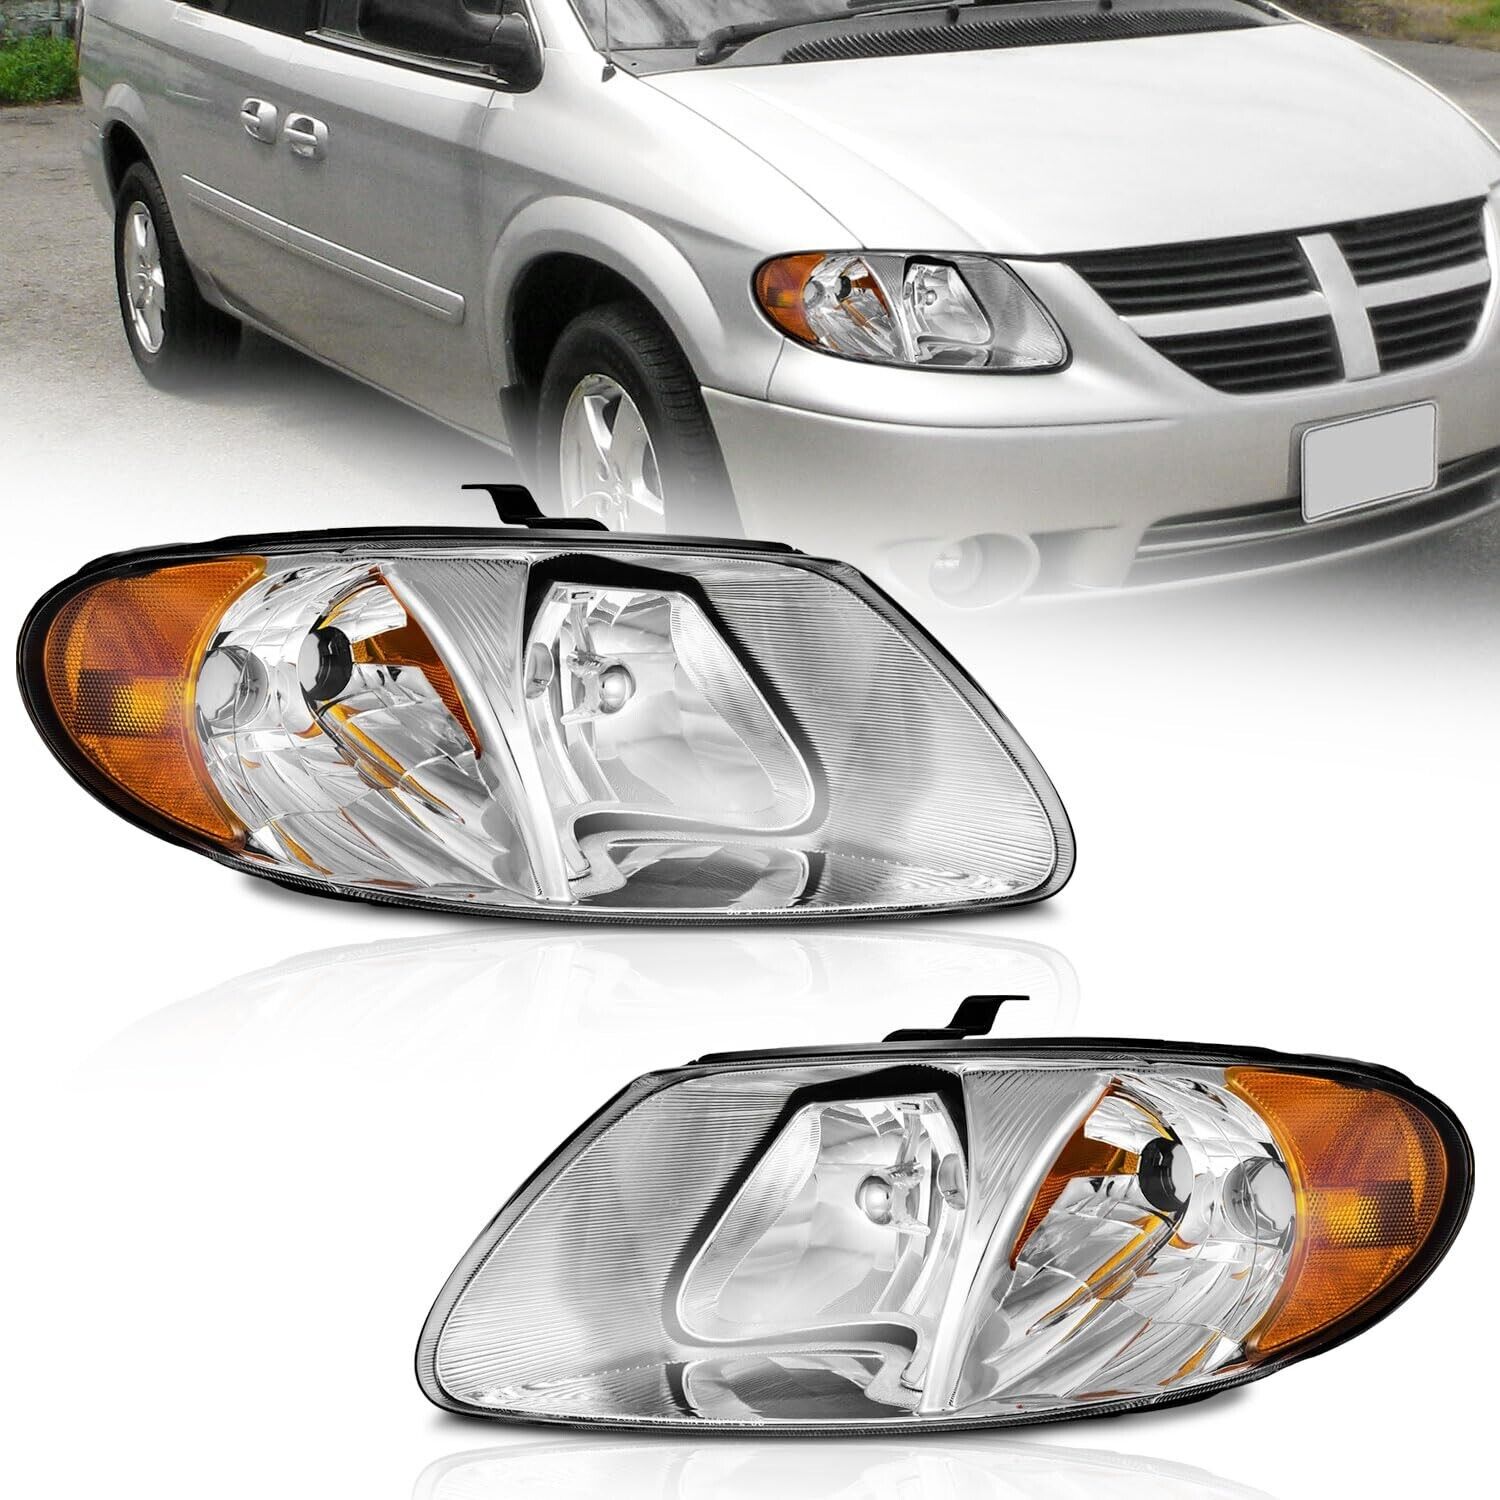 WEELMOTO Headlights For 2001-2007 Dodge Grand Caravan/Chrysler Town & Country